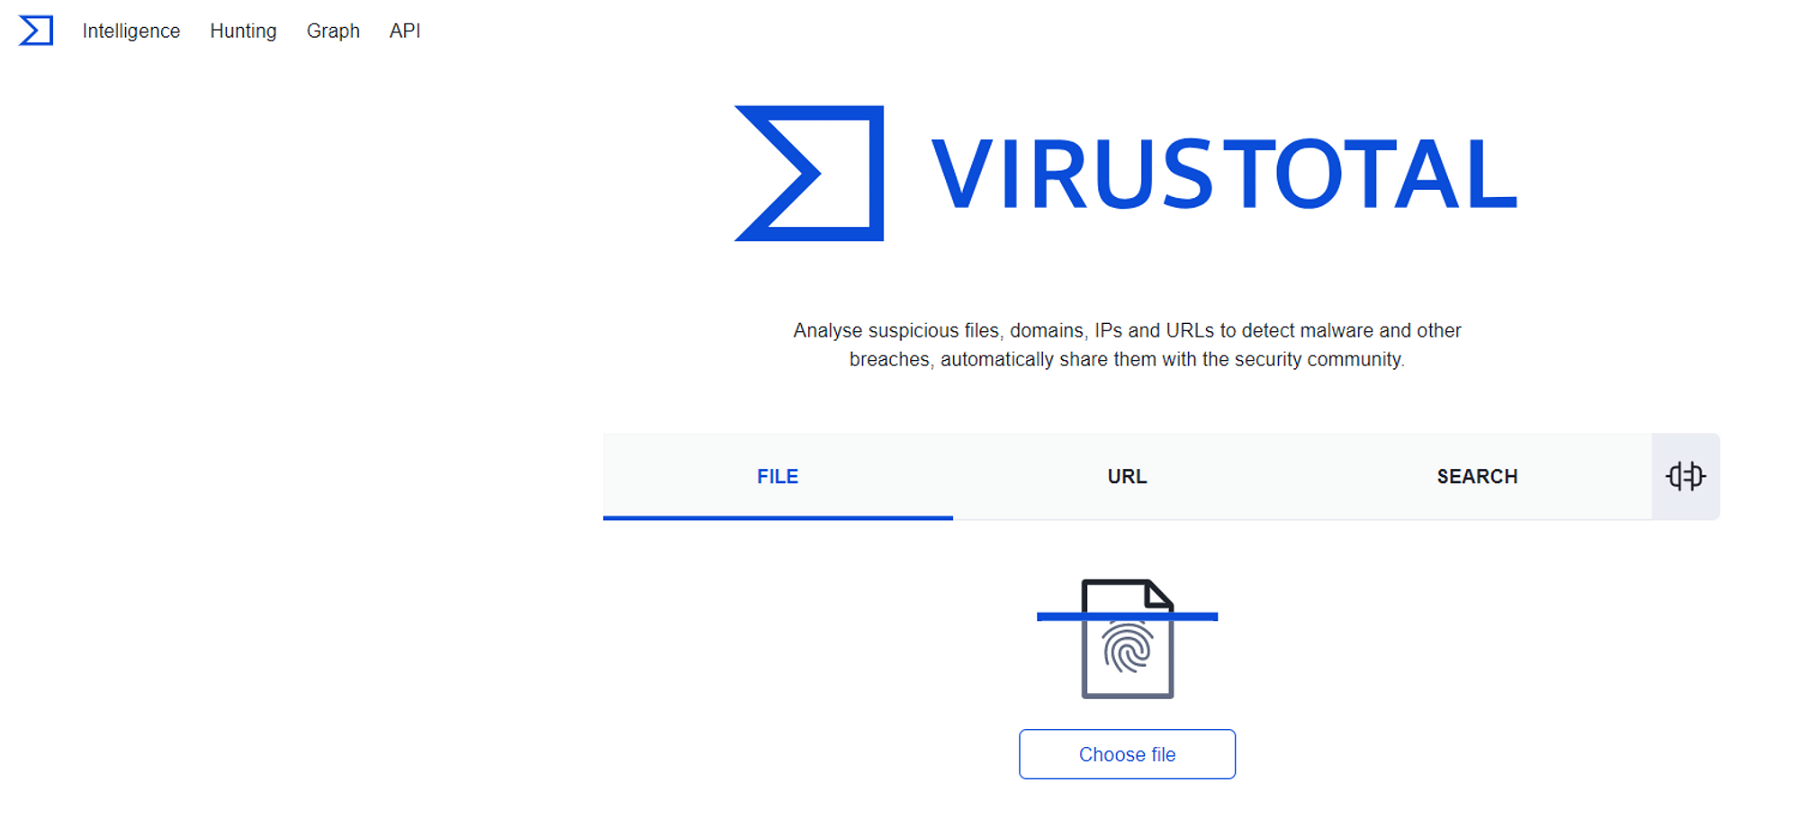 Virustotal Home Page